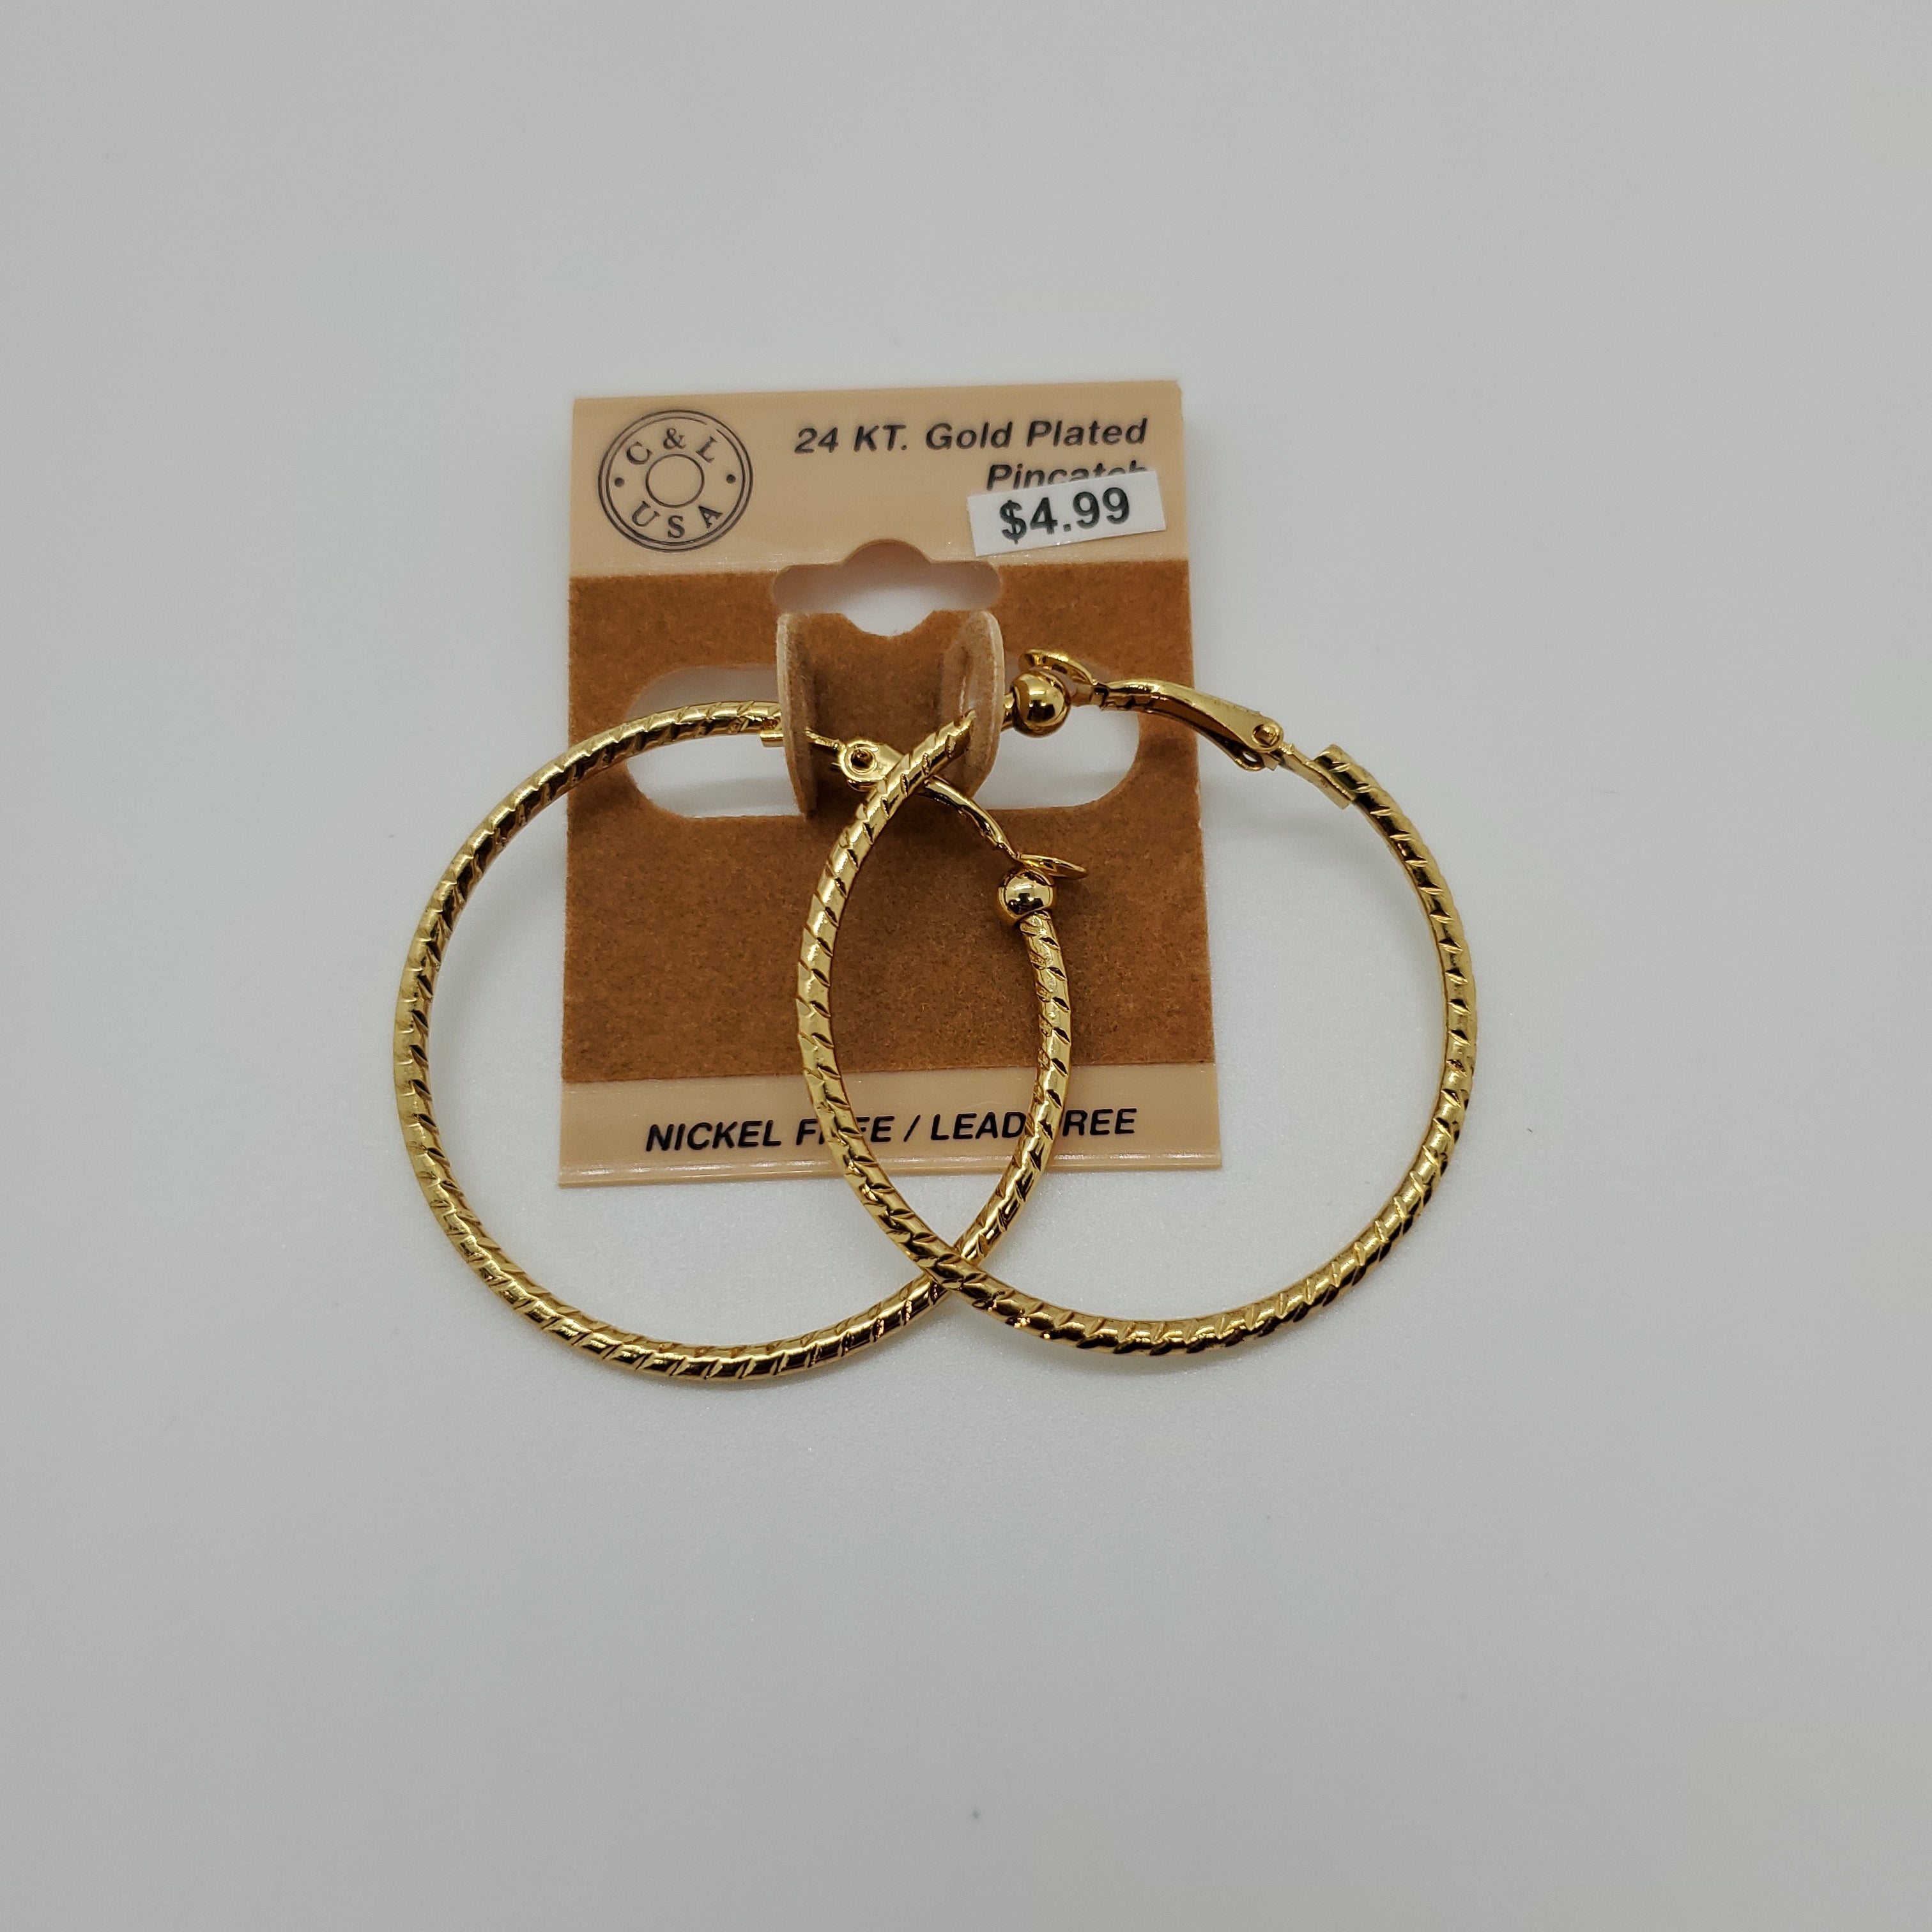 24KT Gold Plated Clip On Hoop Earrings NPK206 - Beauty Bar & Supply